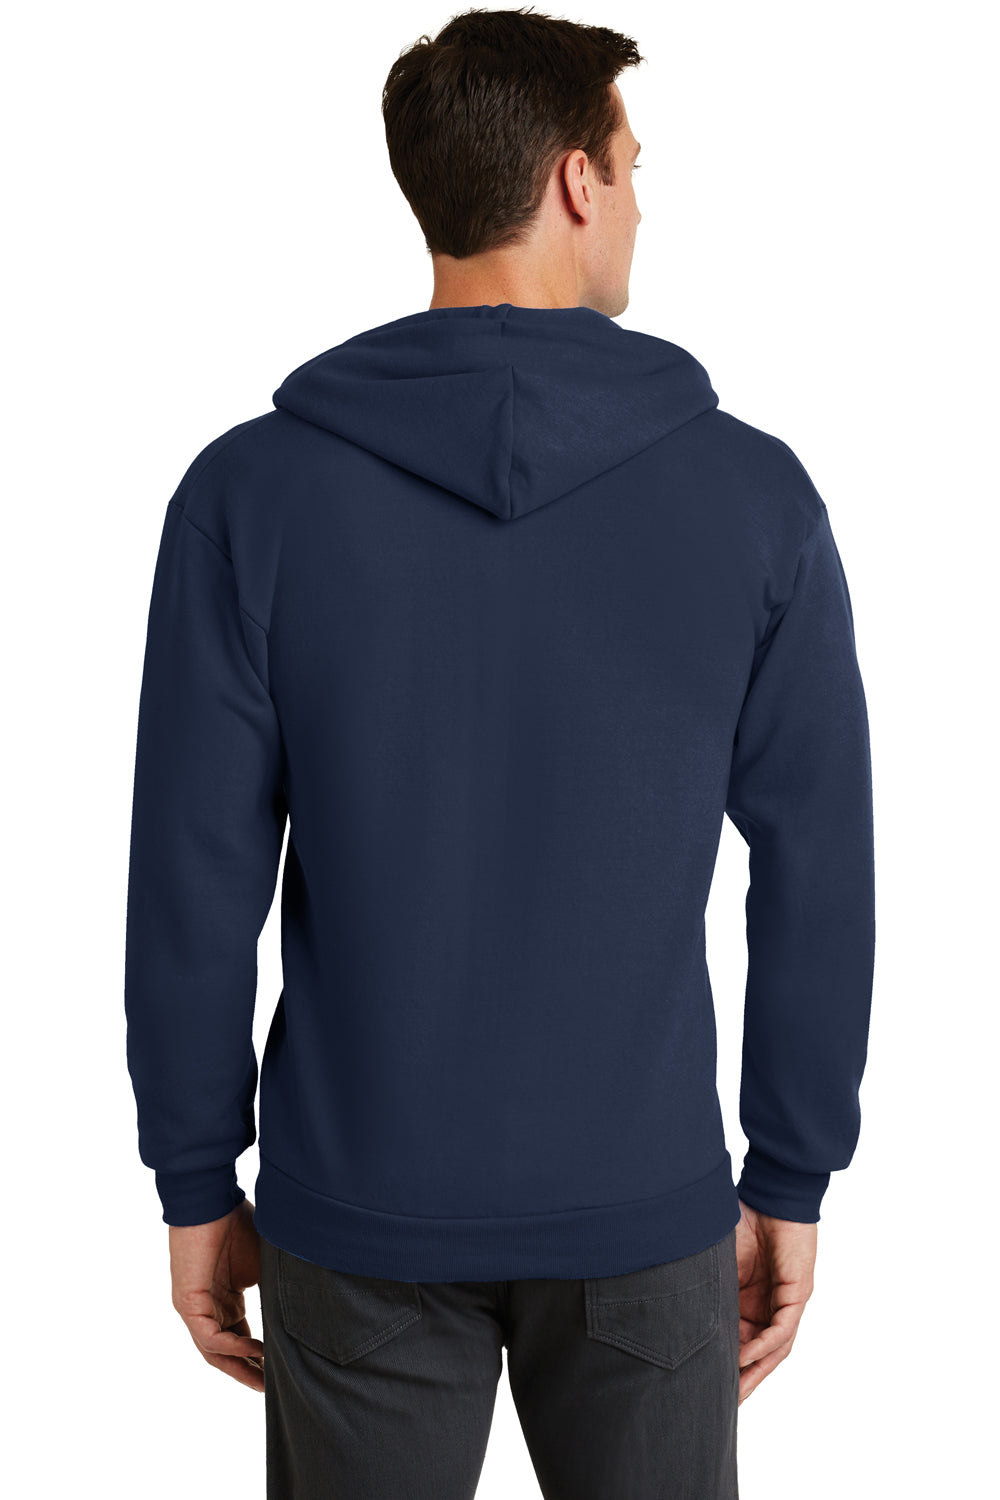 Port & Company PC78ZH Mens Core Fleece Full Zip Hooded Sweatshirt Hoodie Navy Blue Back